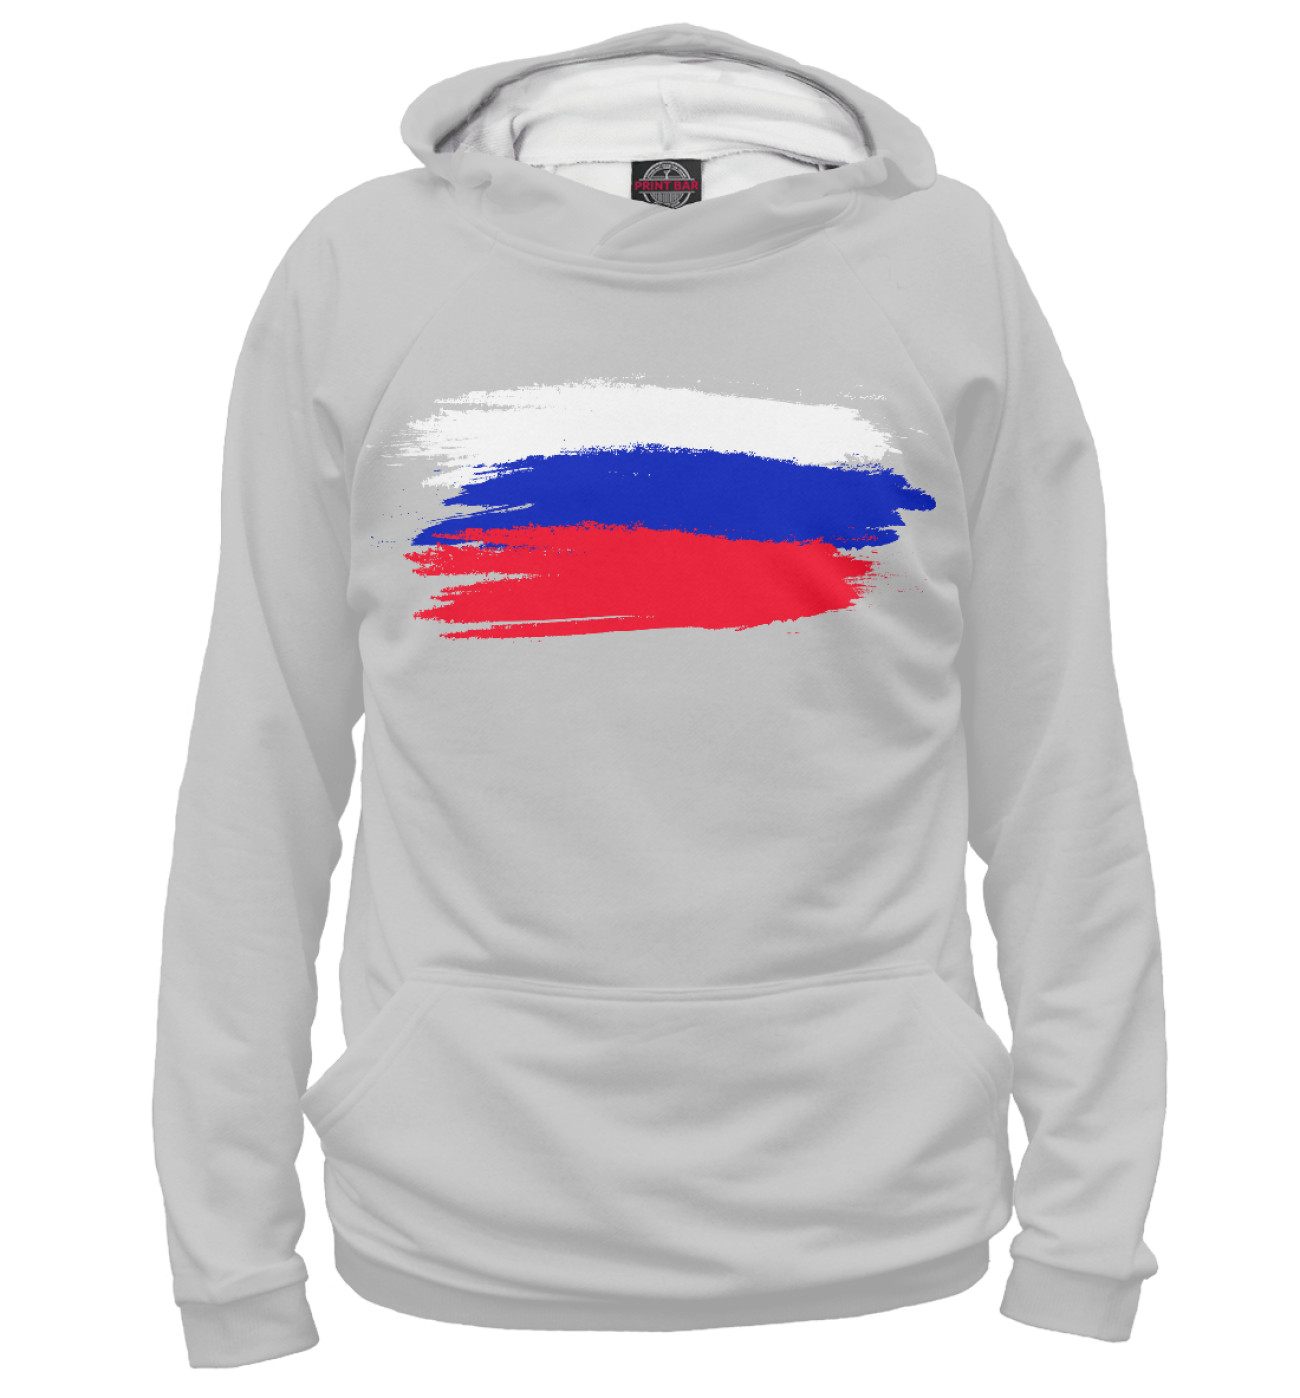 Мужское Худи Флаг России, артикул: SRF-229577-hud-2